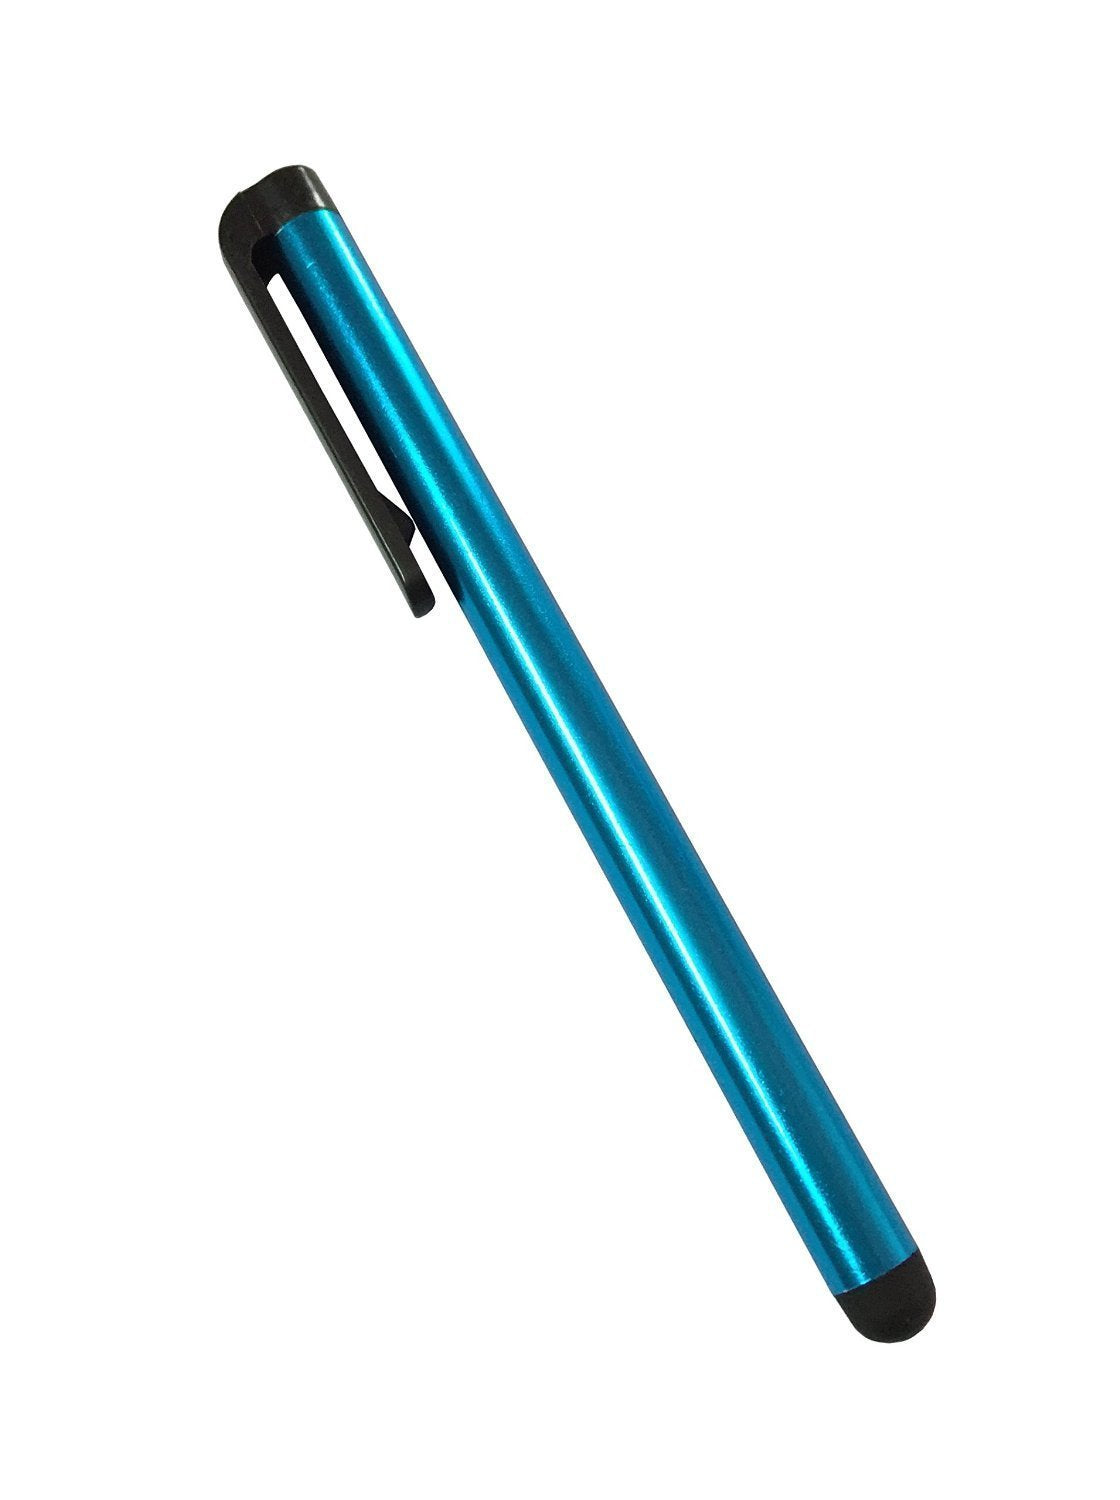 Universal Stylus Pen - For Mobile, Tablets & iPad - Random Color